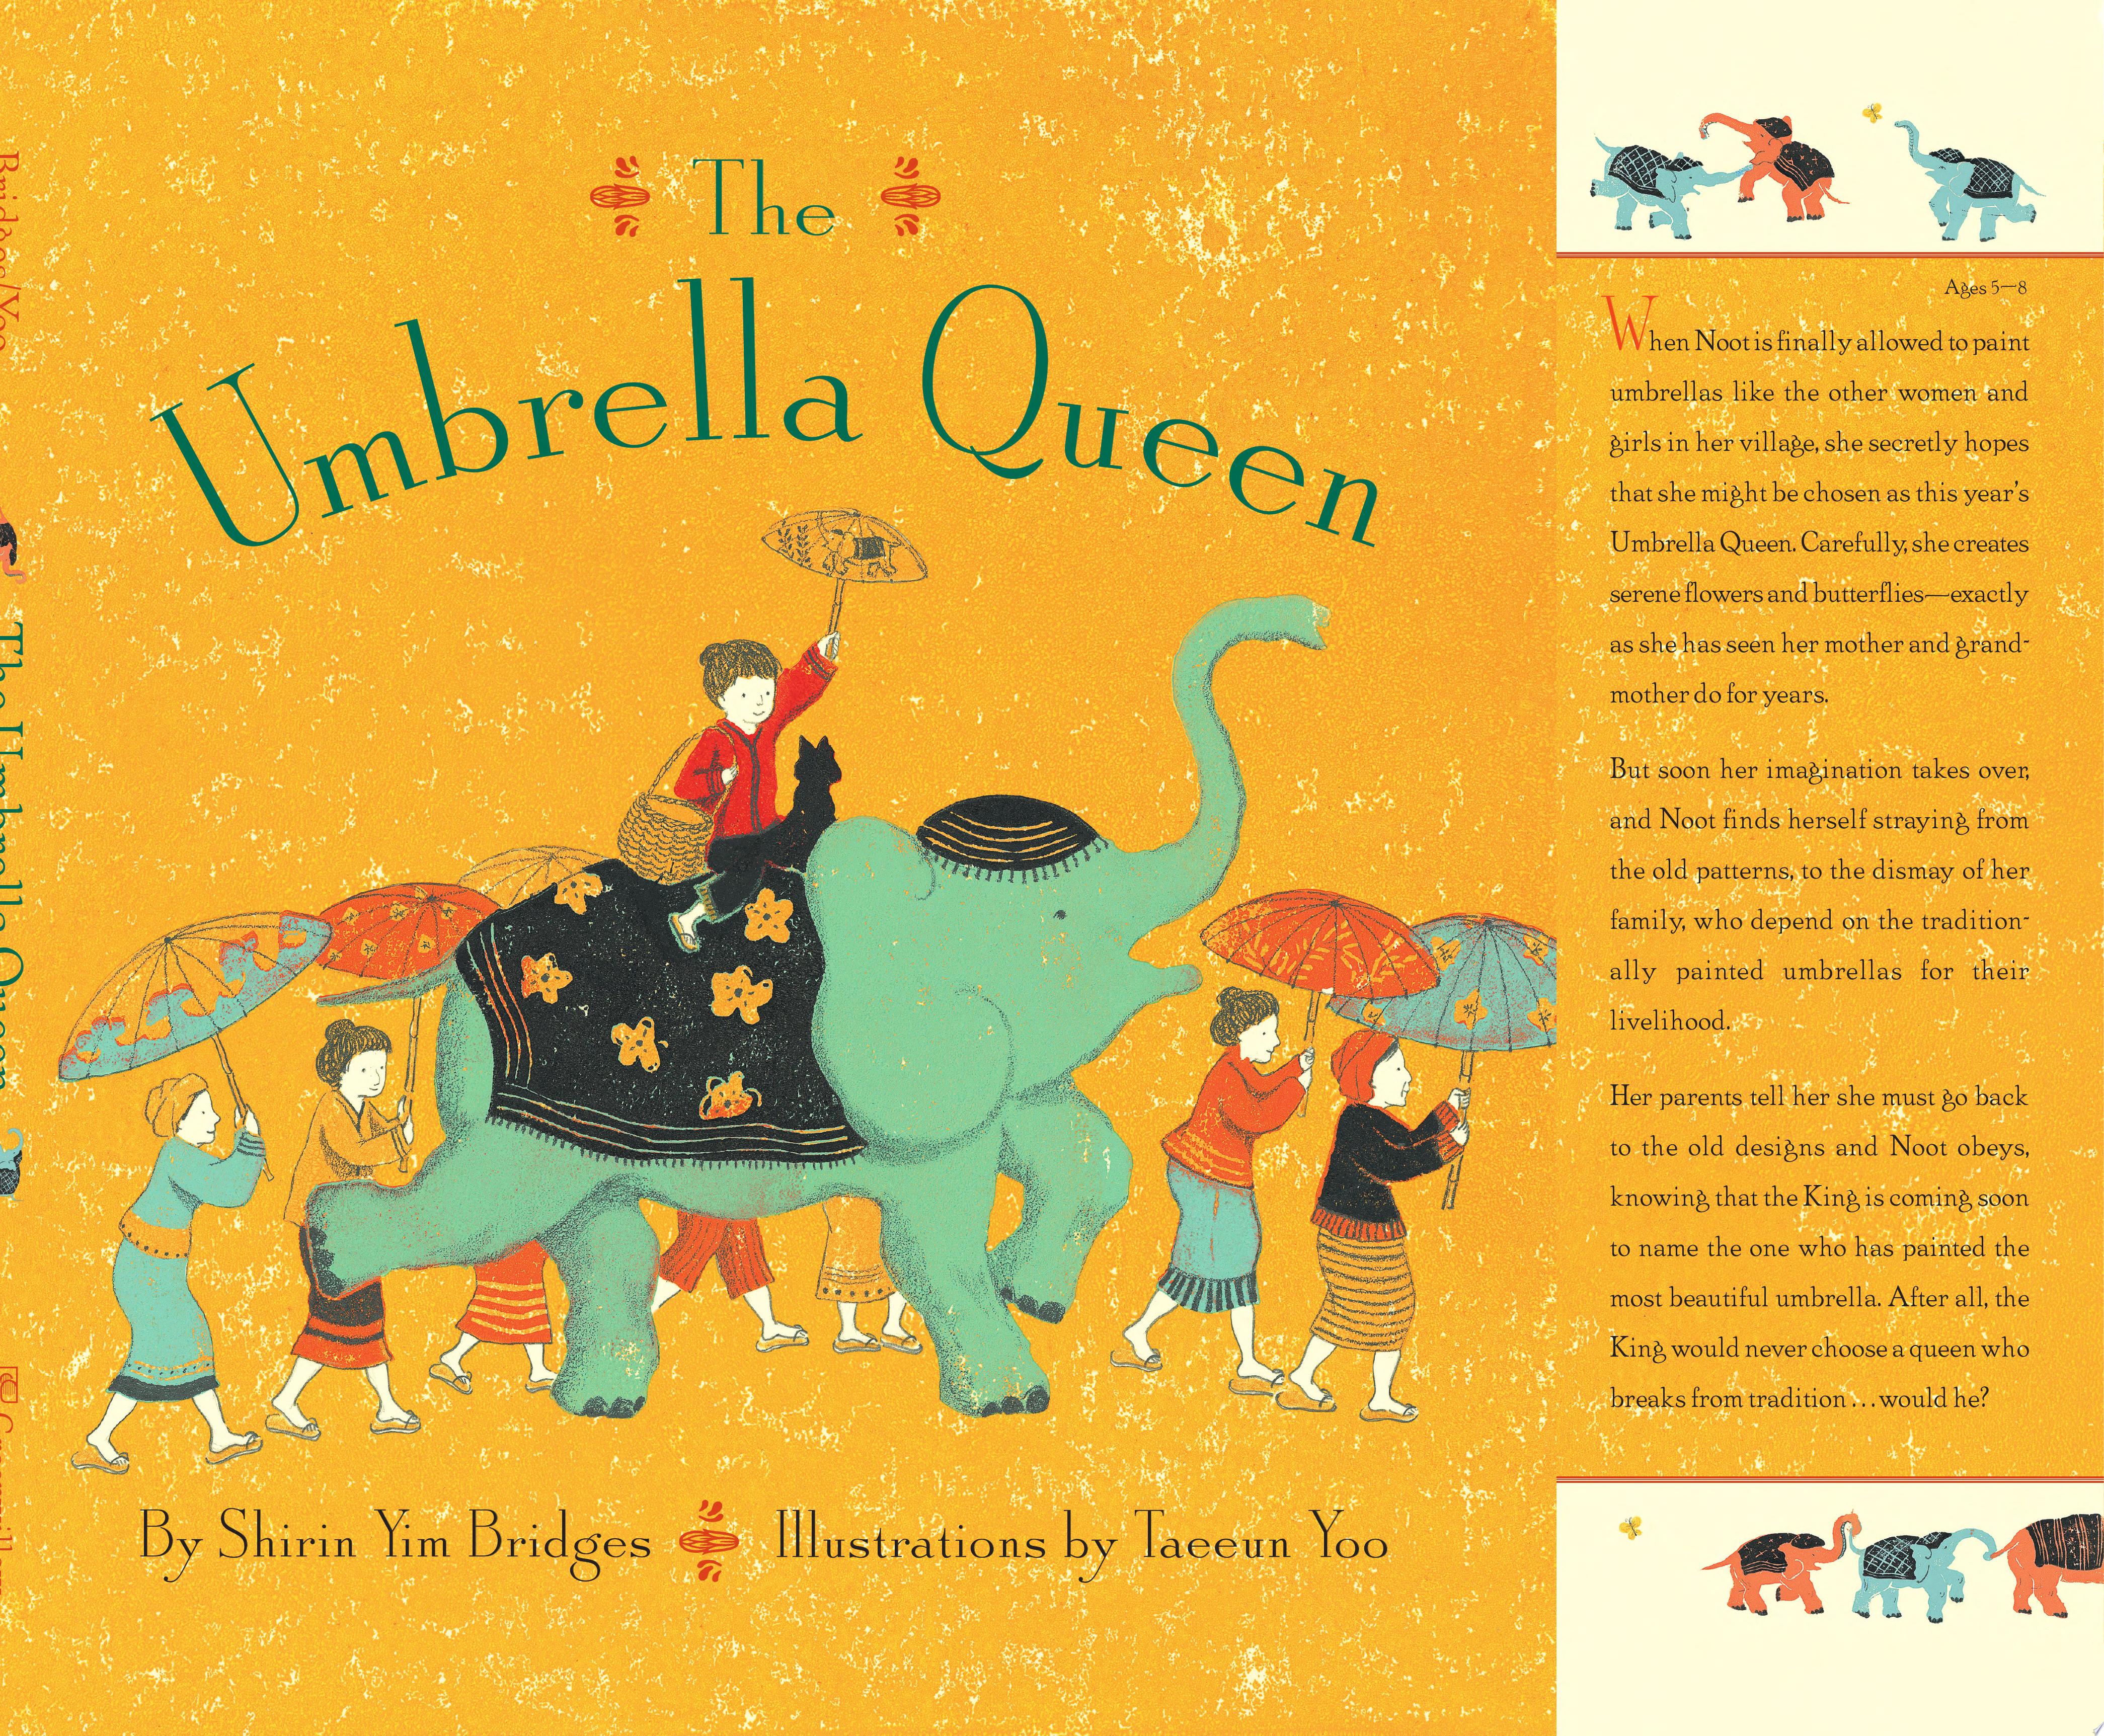 Image for "The Umbrella Queen"